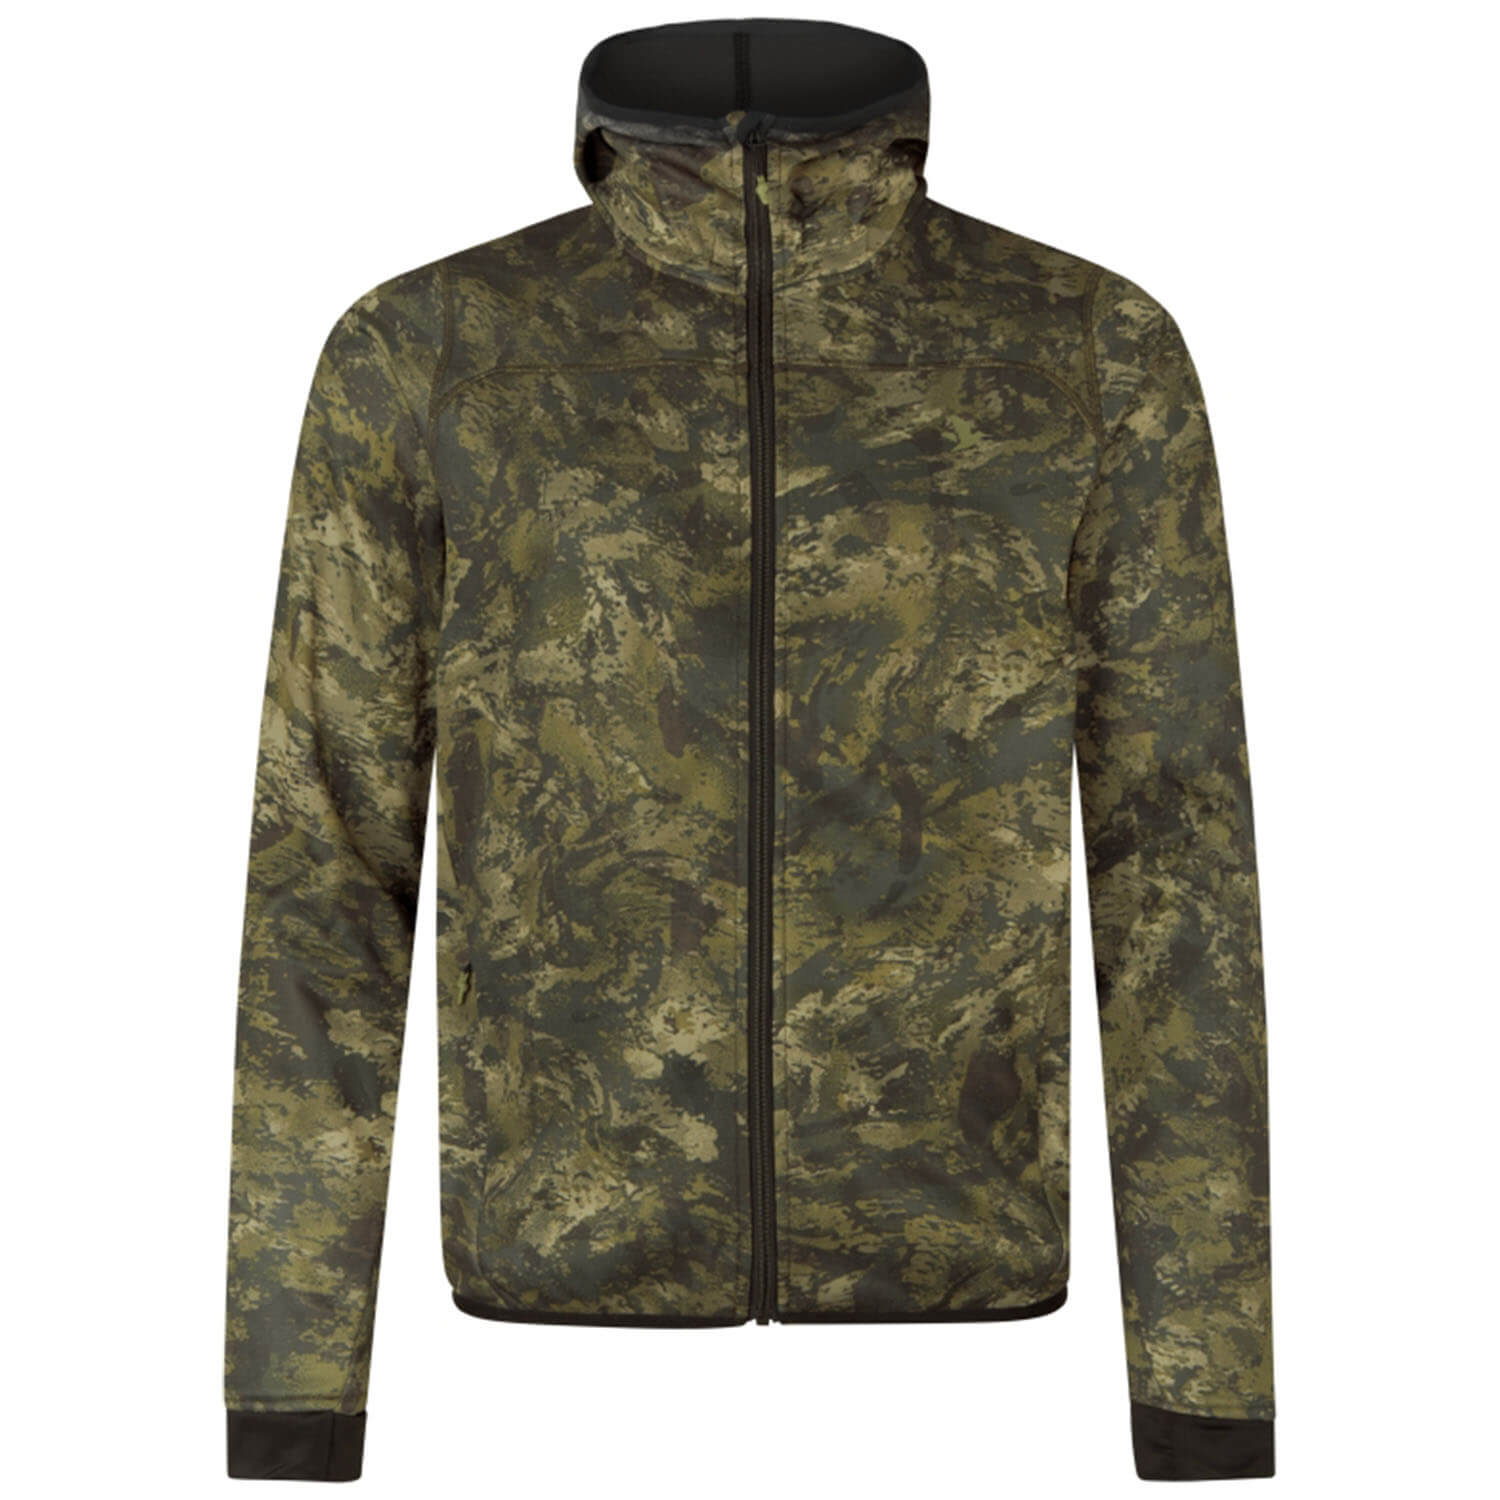 Seeland fleece jacket power camo (InVis green) - Sale